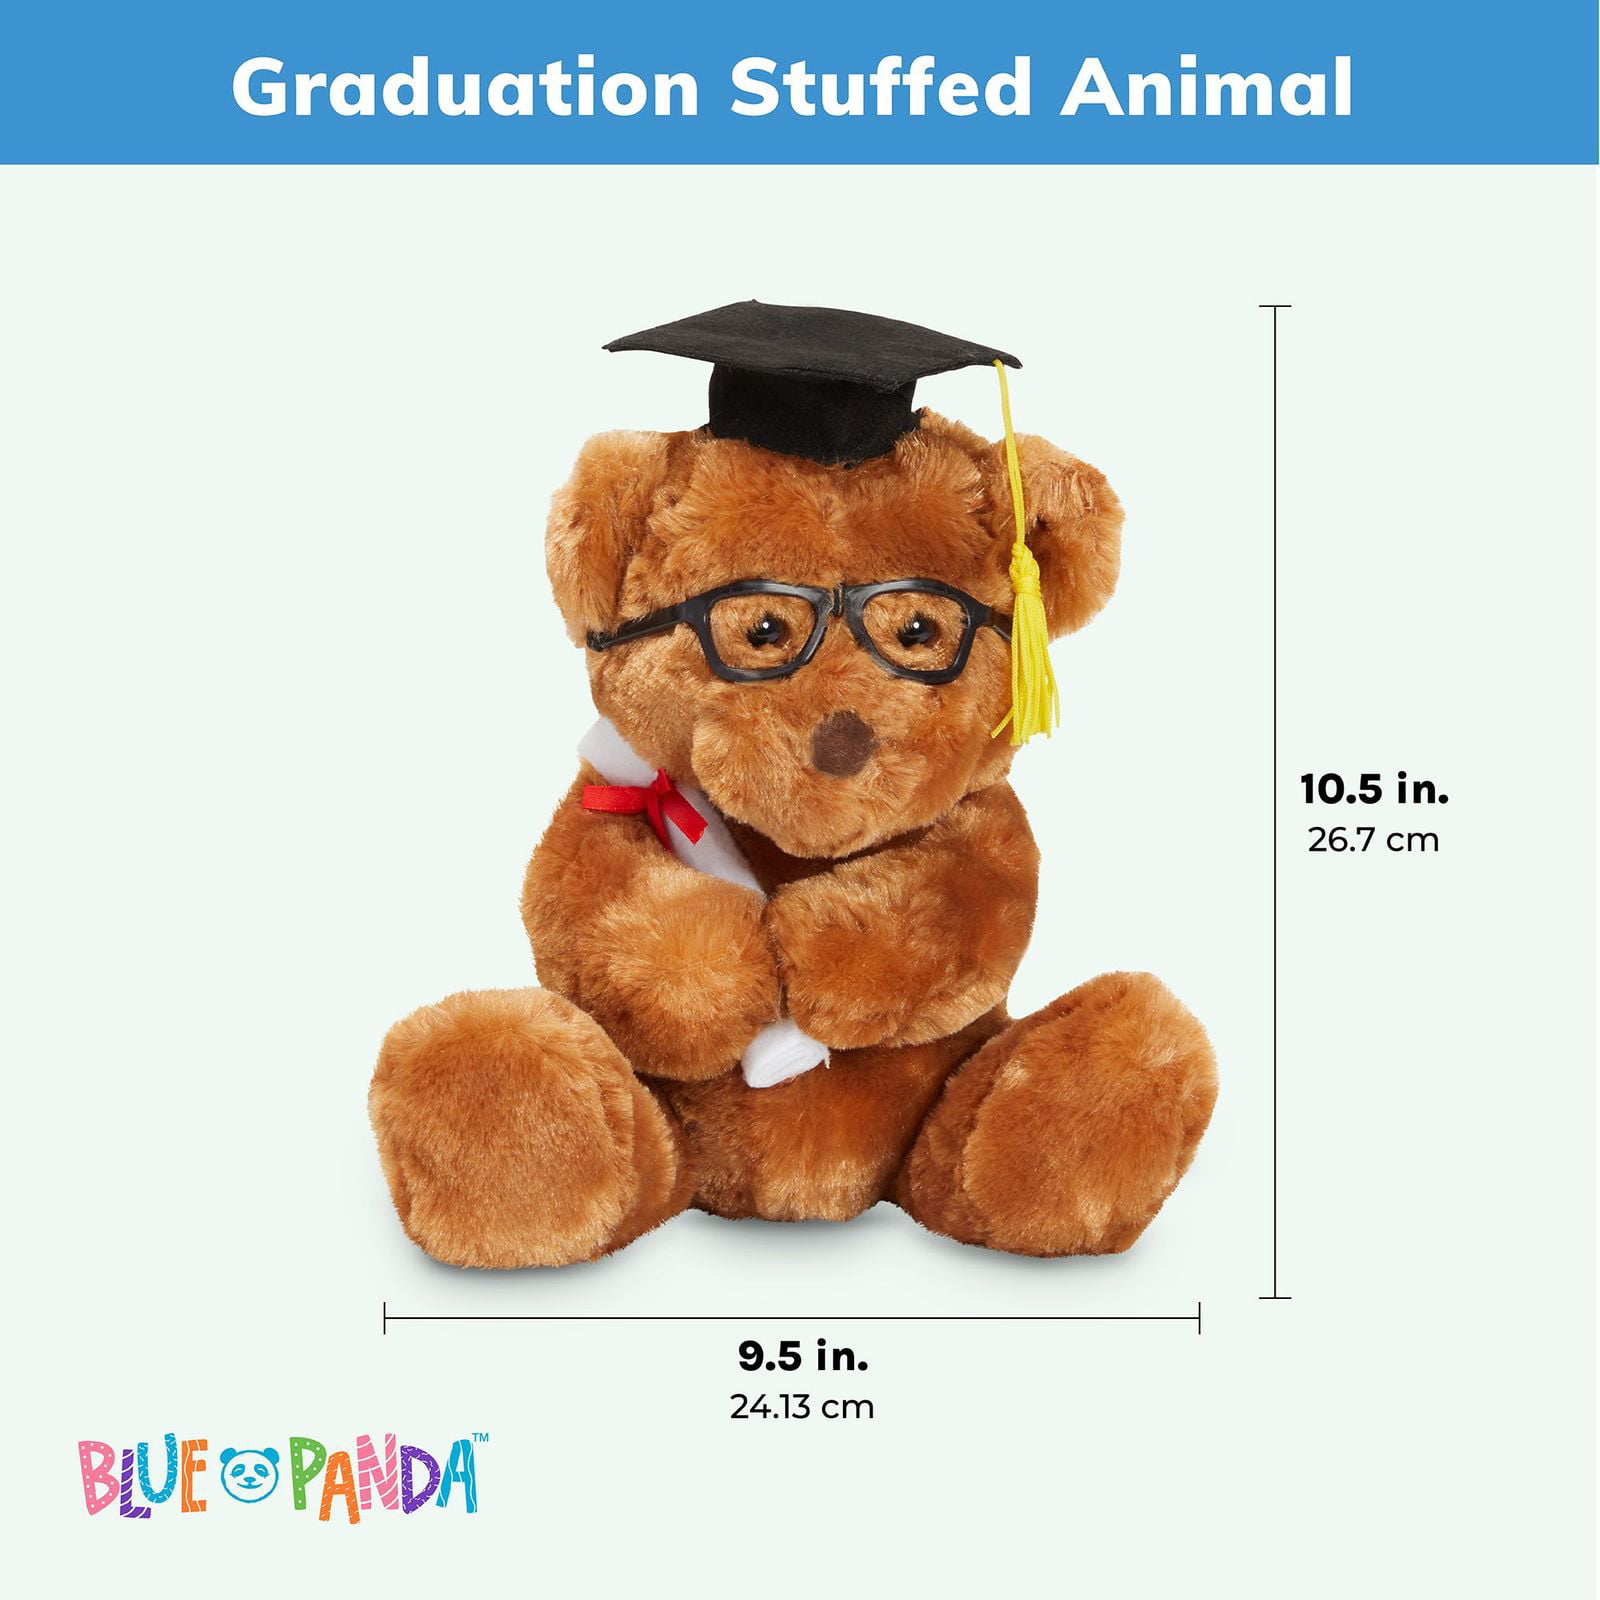 Customized graduation plush bear for her 2020 I love you gift Box Panda 12" 